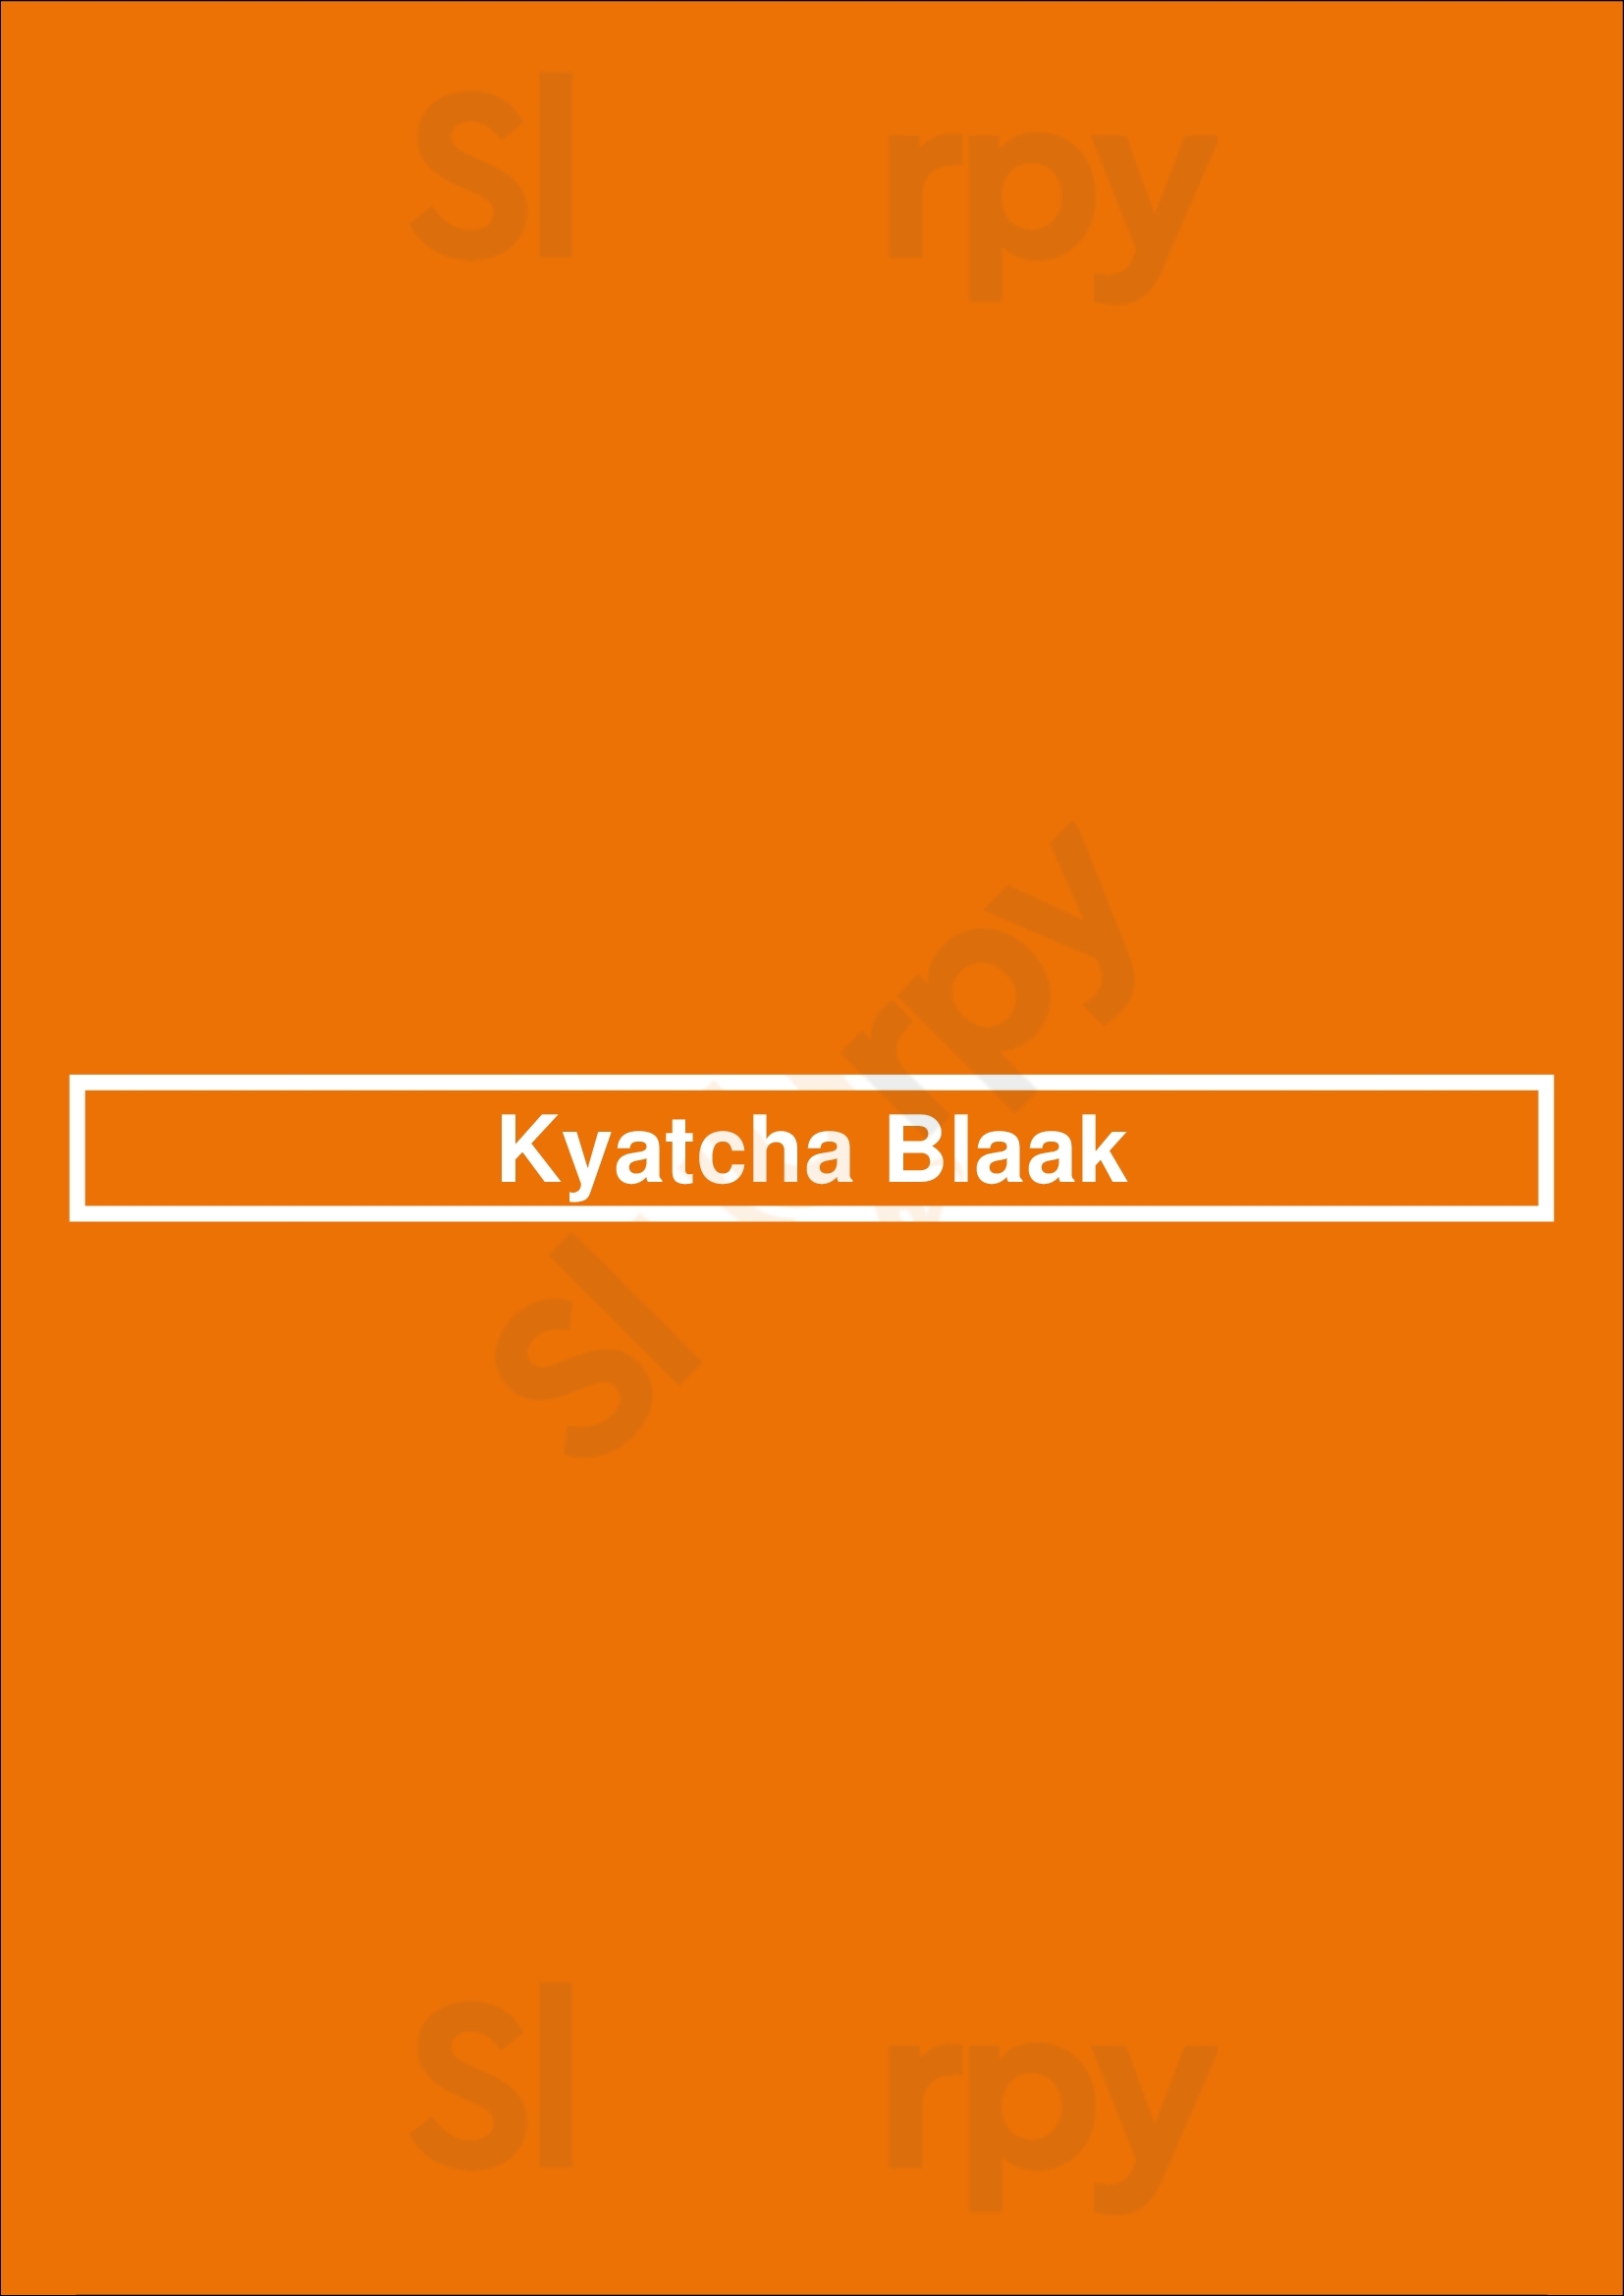 Kyatcha Blaak Rotterdam Menu - 1